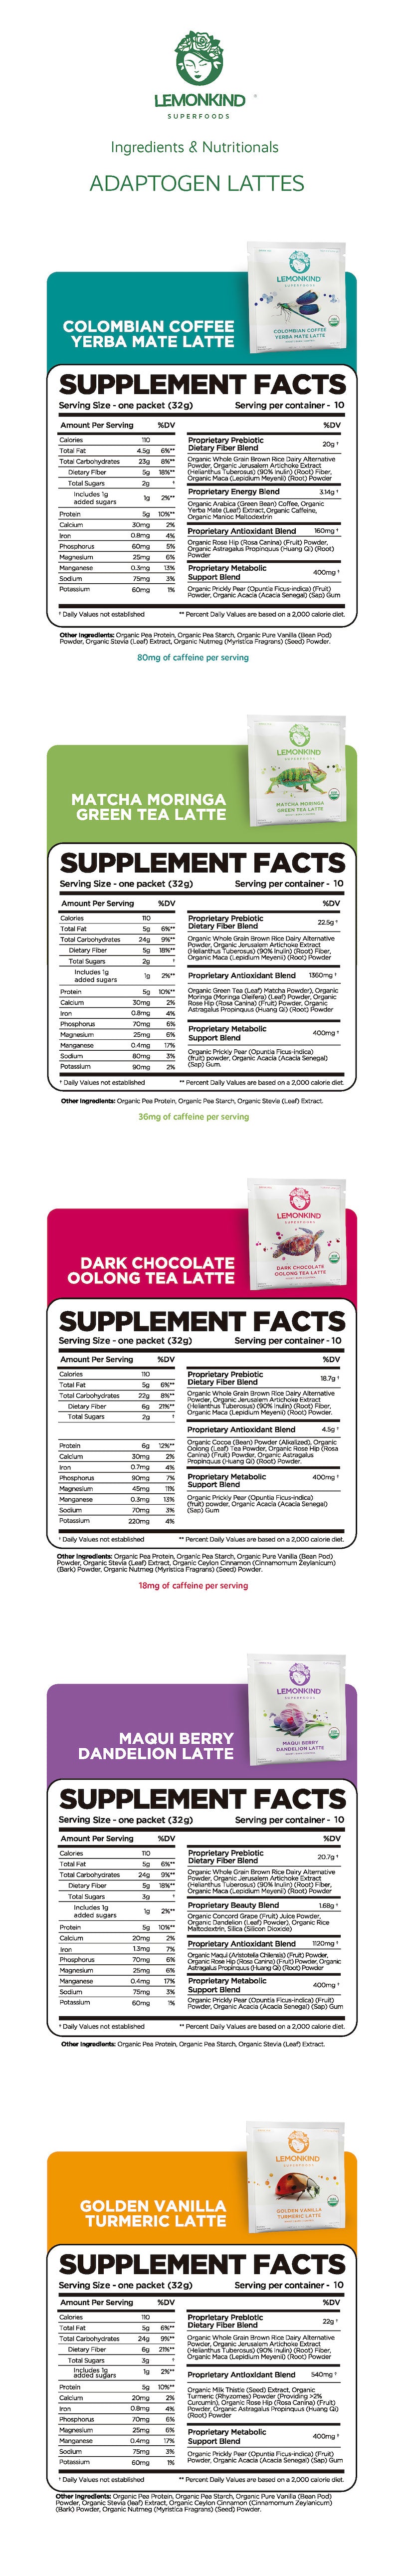 Supplement labels for adaptogen lattes